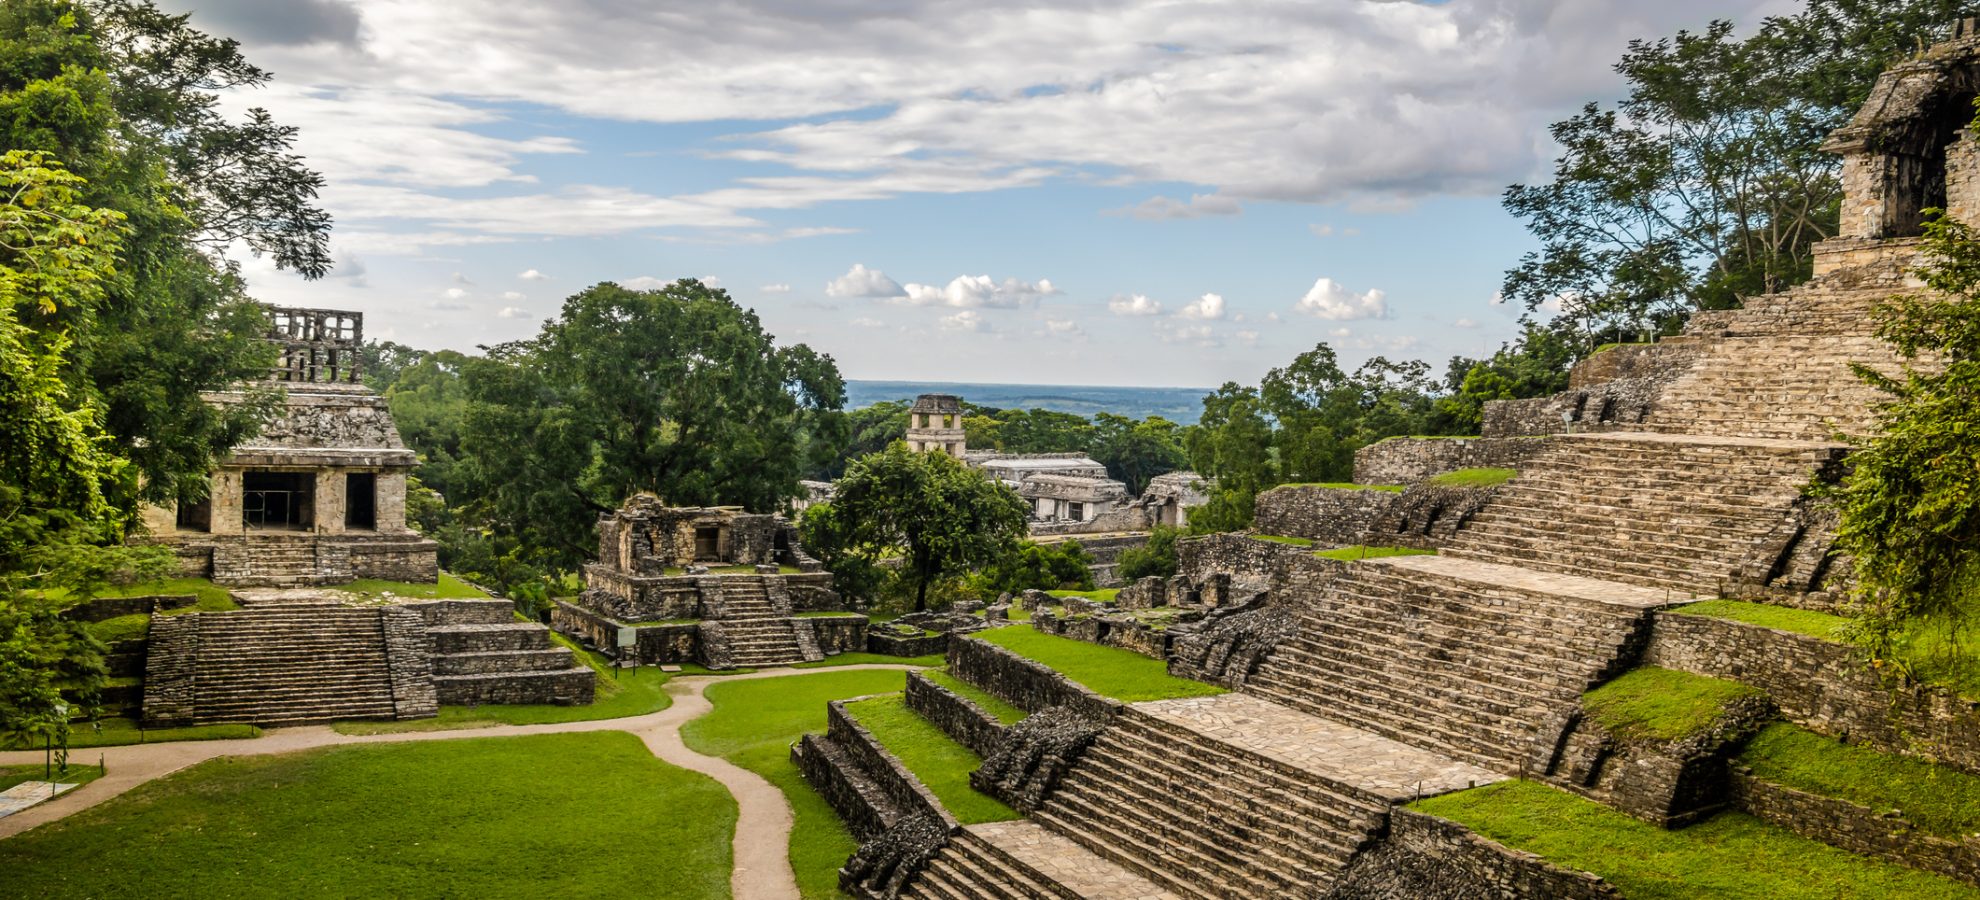 Mayan ruins of Palenque, Chiapas, Mexico